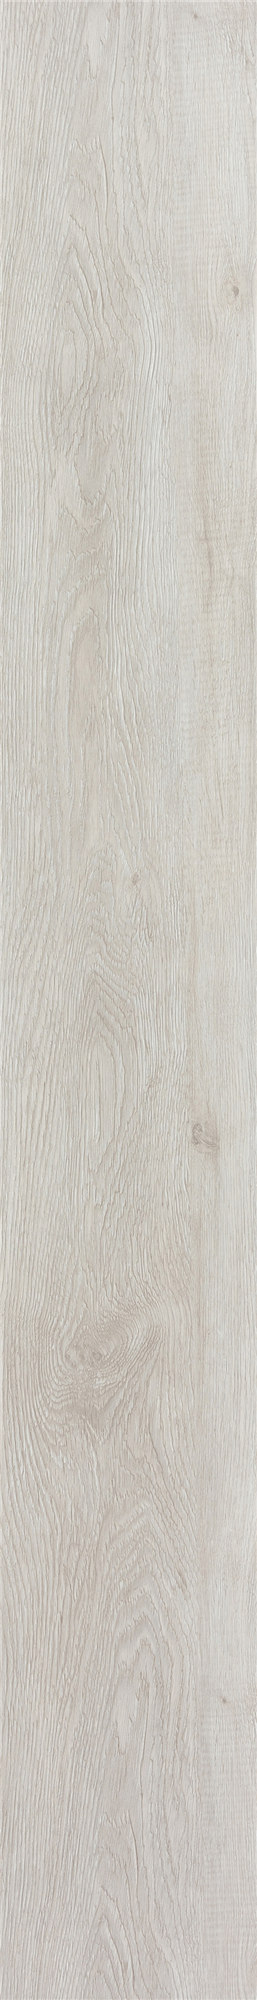 Hanflor White Oak Rigid Core SPC Plank Flooring Commercial Vinyl Flooring 9''X48'' 4.2 mm  HKC 19501